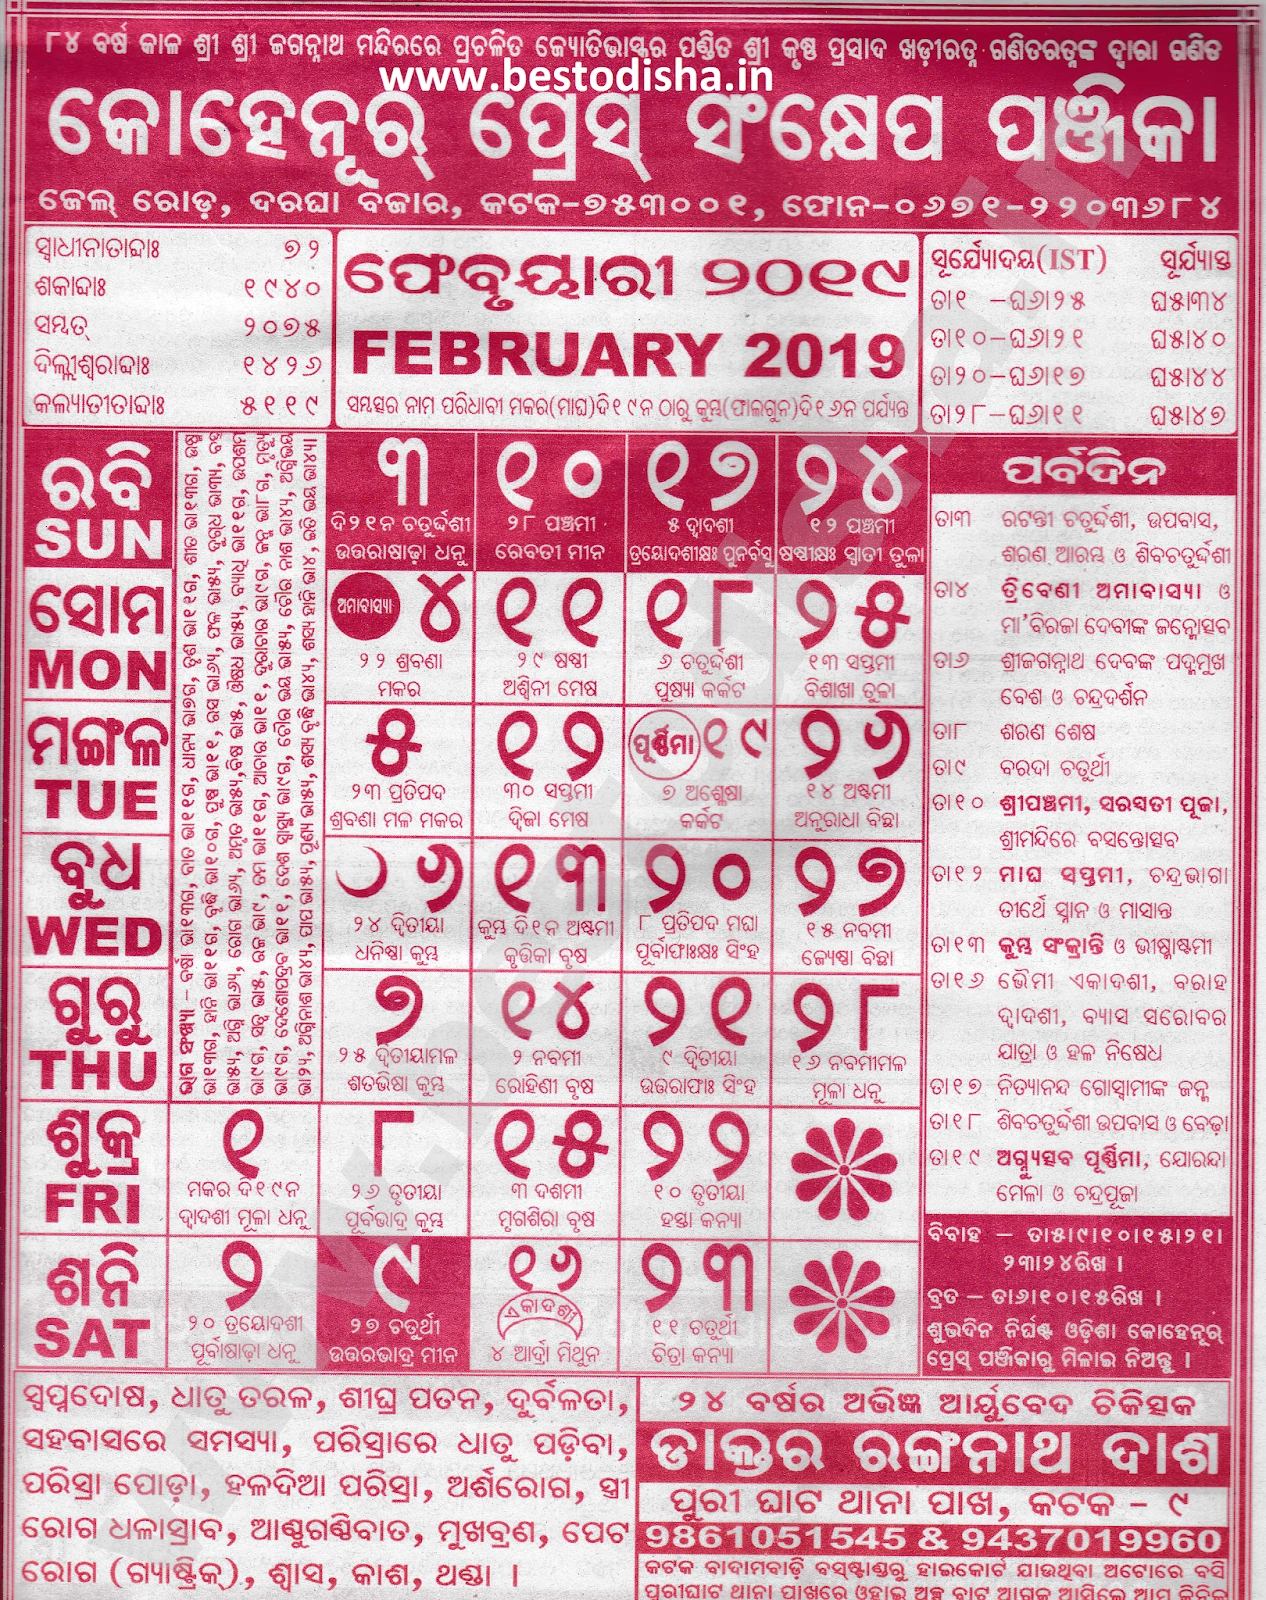 Best Odisha: Kohinoor Odia Calendar 2019 Pdf Download Here-Odia Kohinoor Calendar 2020 January